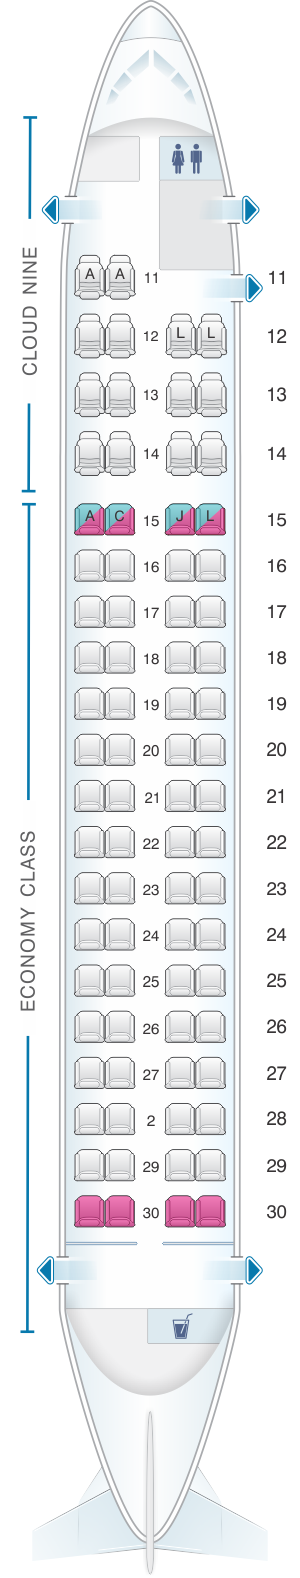 Seat map for Ethiopian Q400 cloude nine